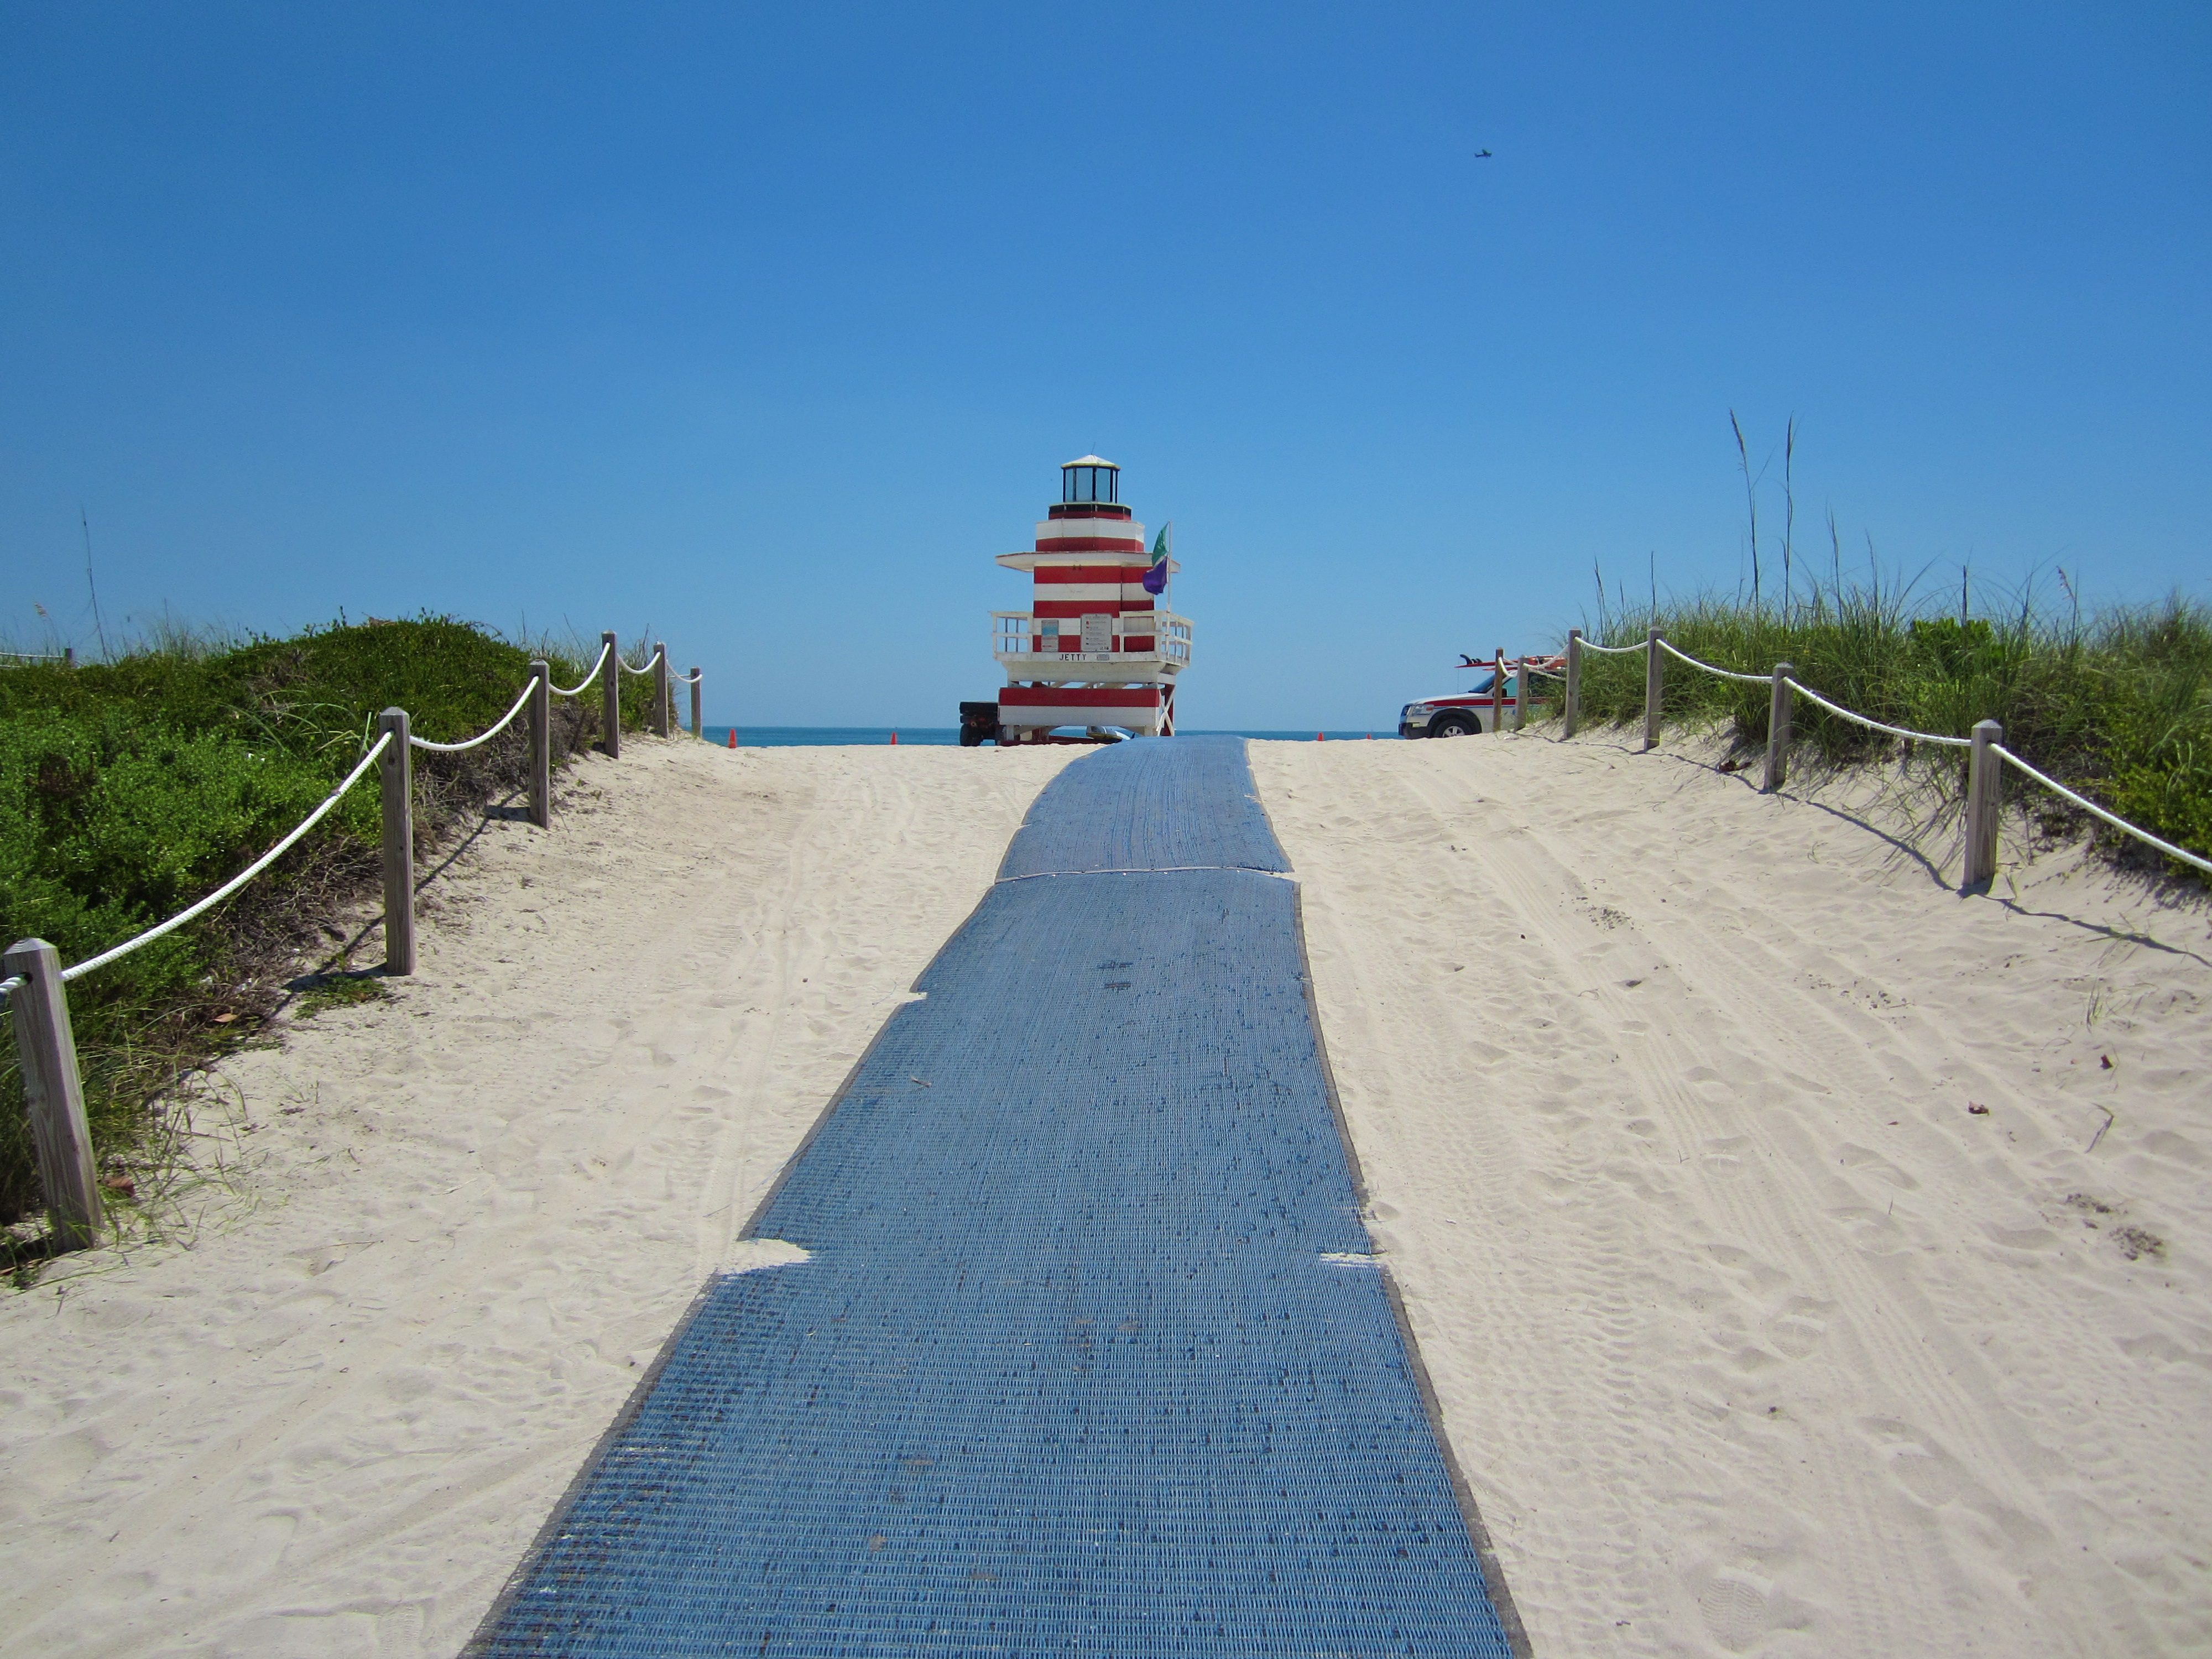 Example of a beach mat providing wheelchair access to the beach